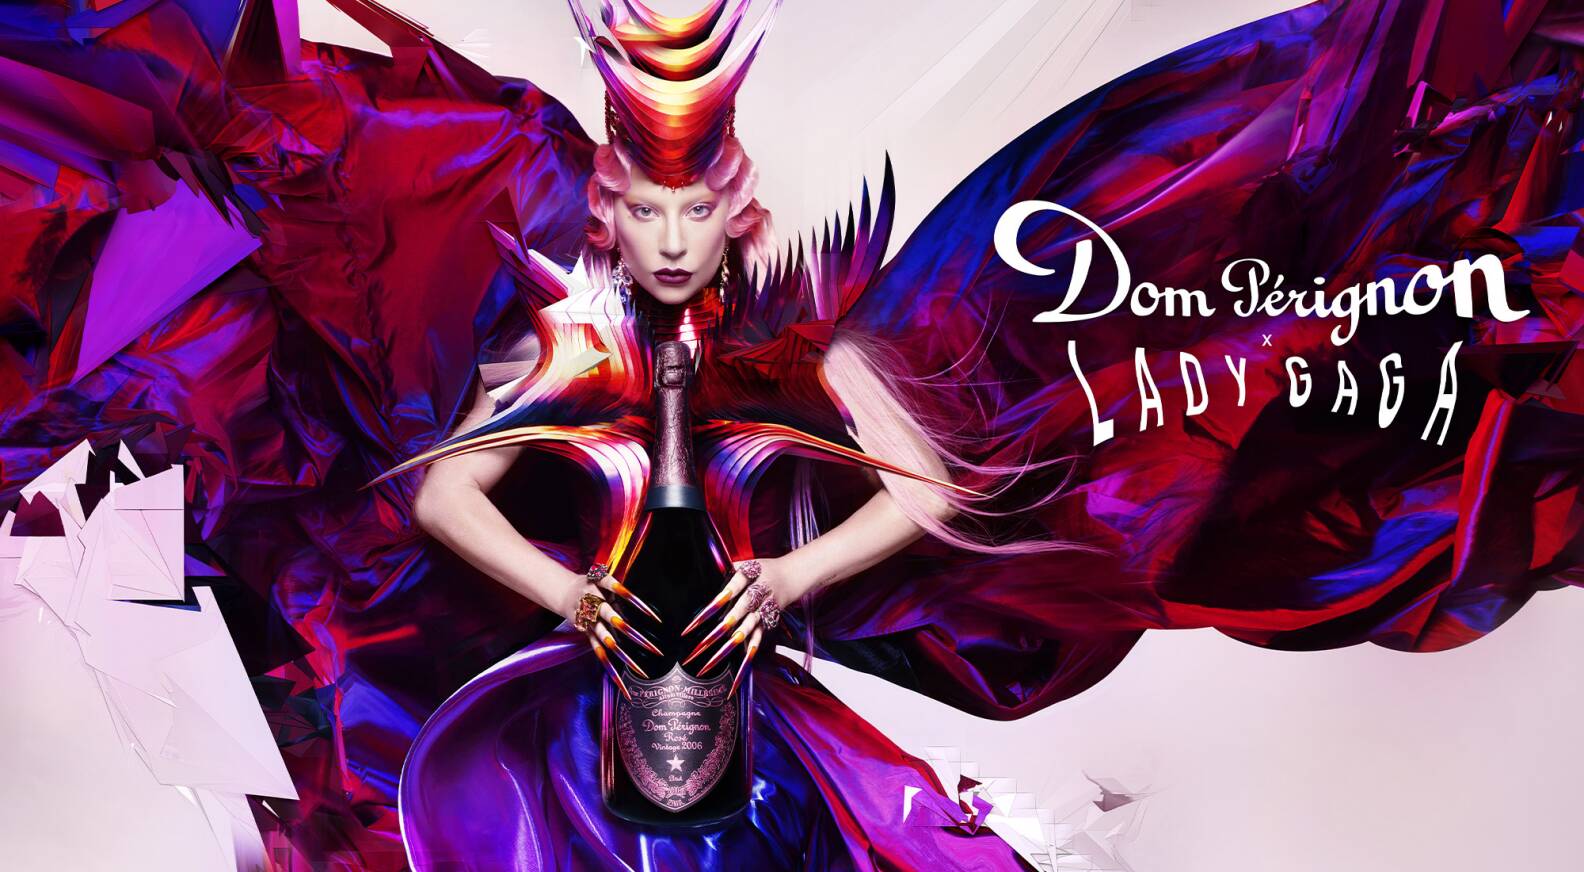 Dom Pérignon - Lady Gaga 